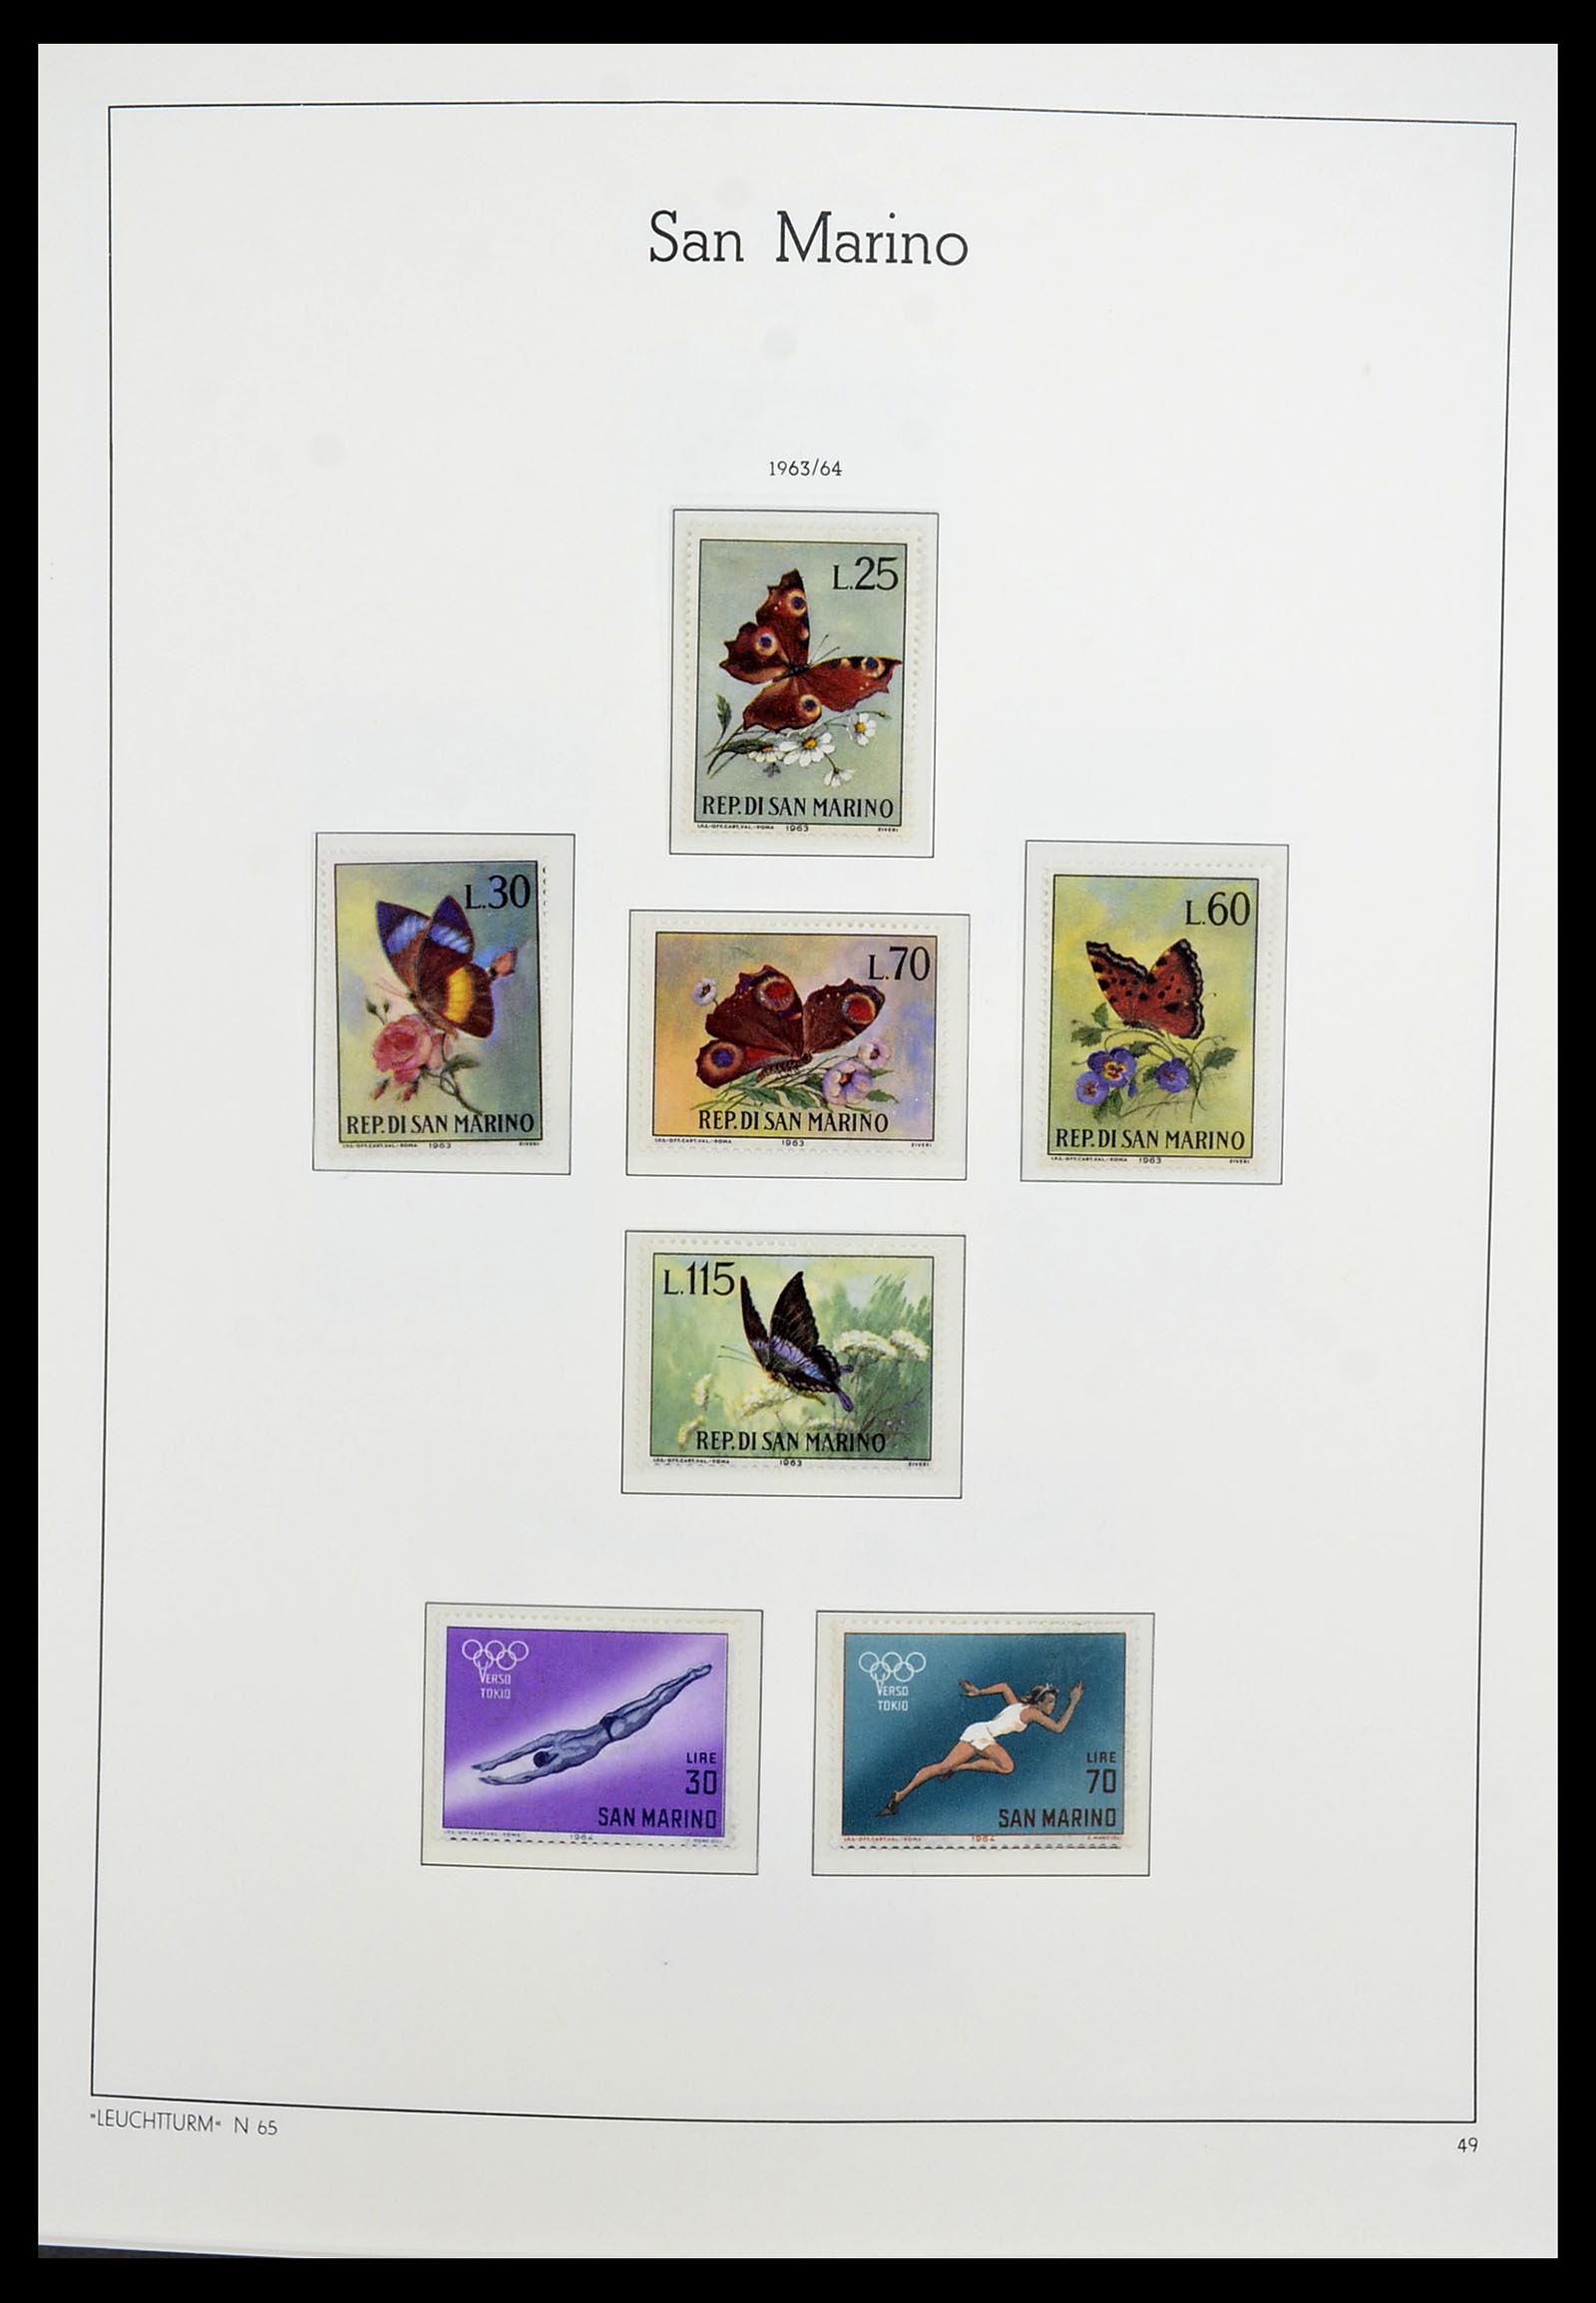 34243 093 - Stamp collection 34243 San Marino 1877-2008.